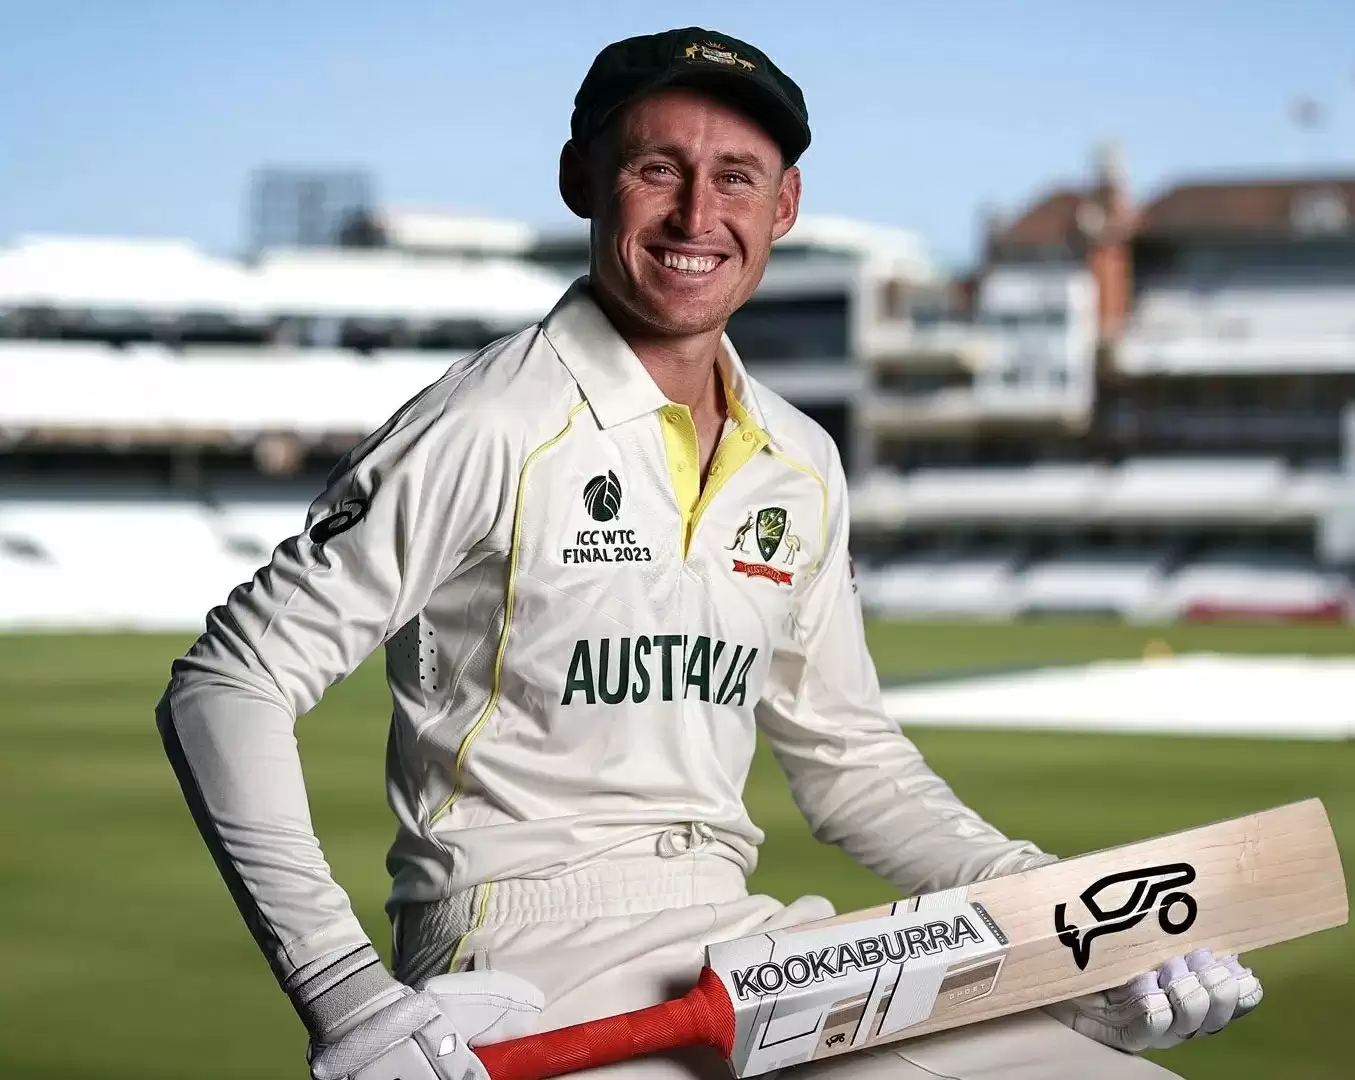 दुनिया के नंबर एक टेस्ट बल्लेबाज बने जो रूट